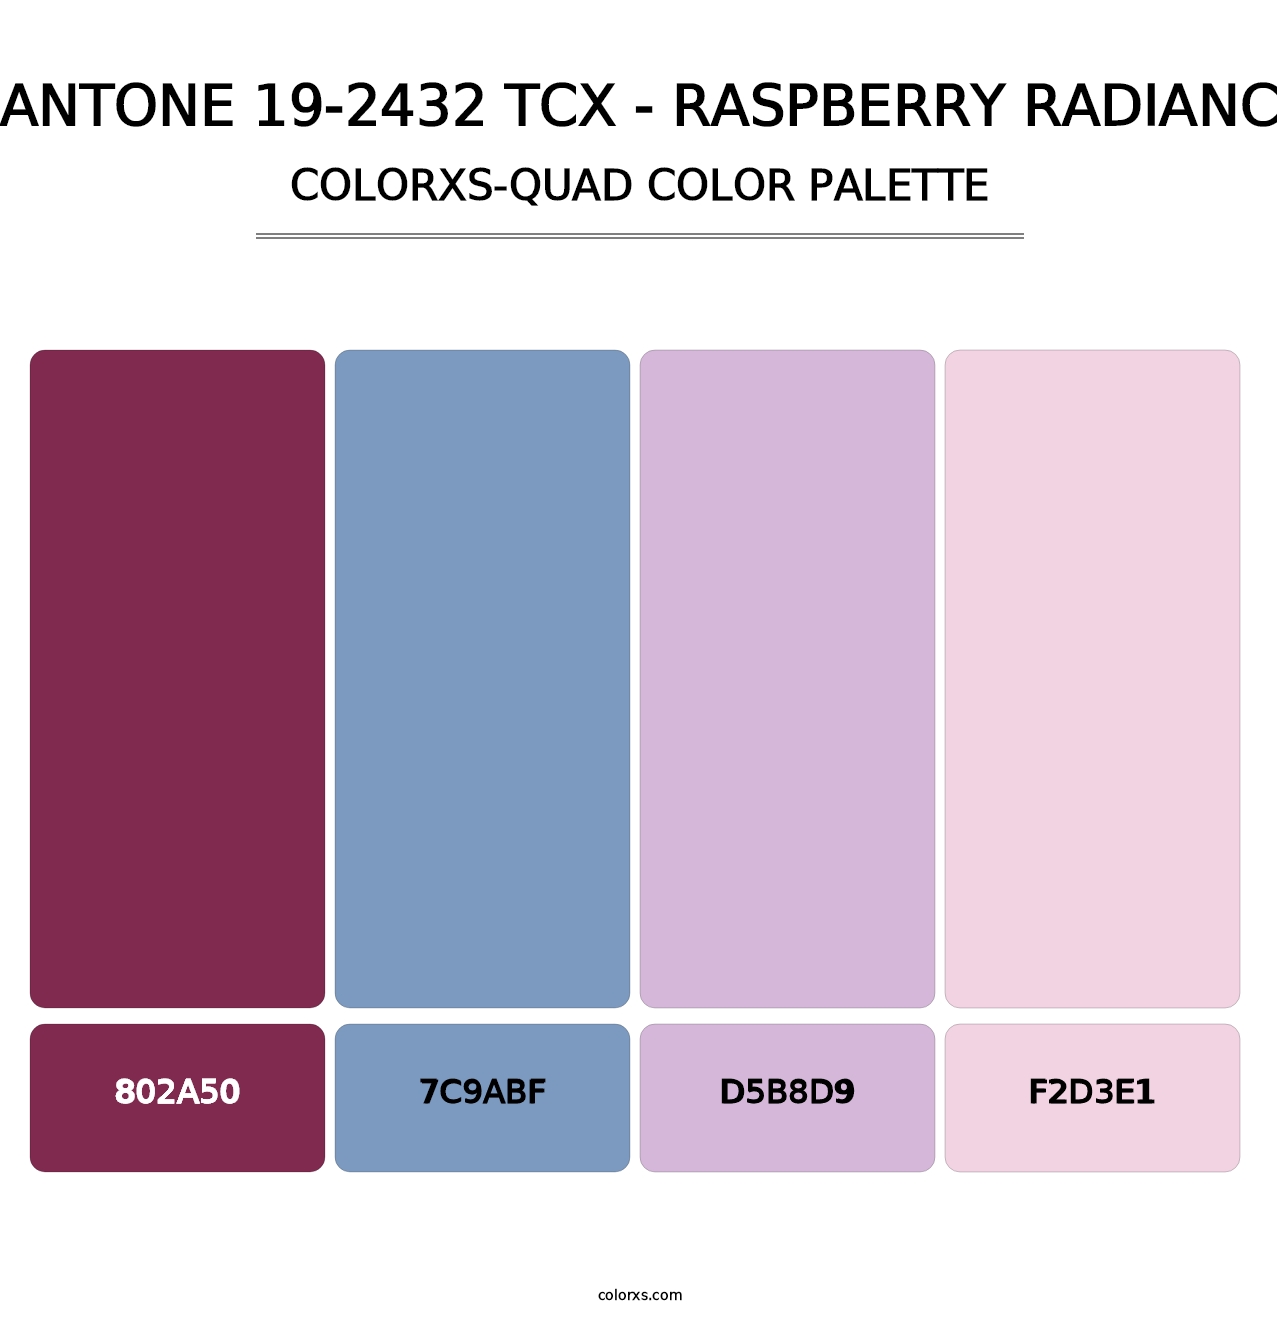 PANTONE 19-2432 TCX - Raspberry Radiance - Colorxs Quad Palette